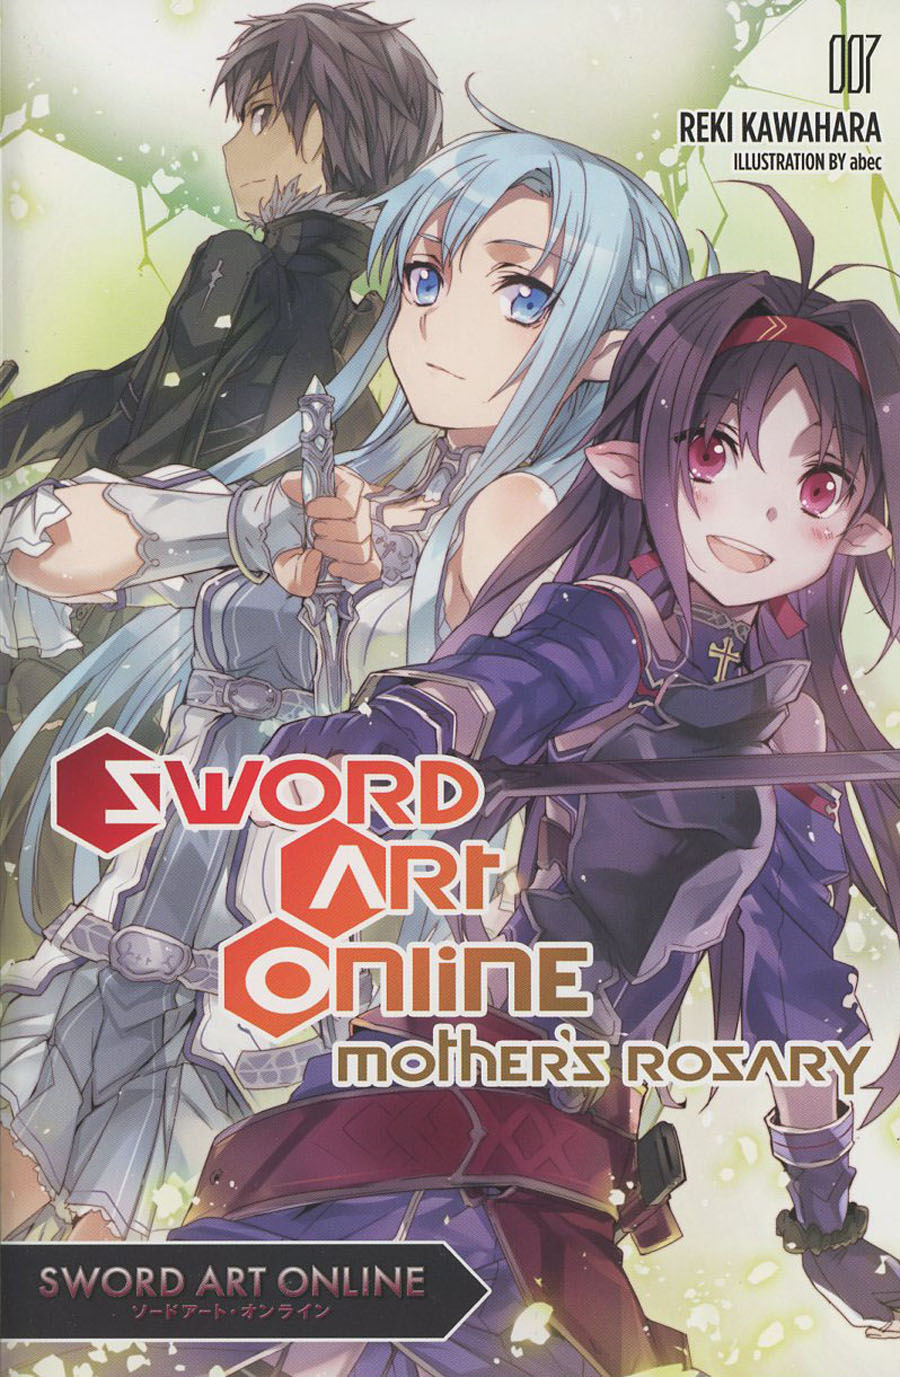 Sword Art Online Novel Vol 7 Mothers Rosary